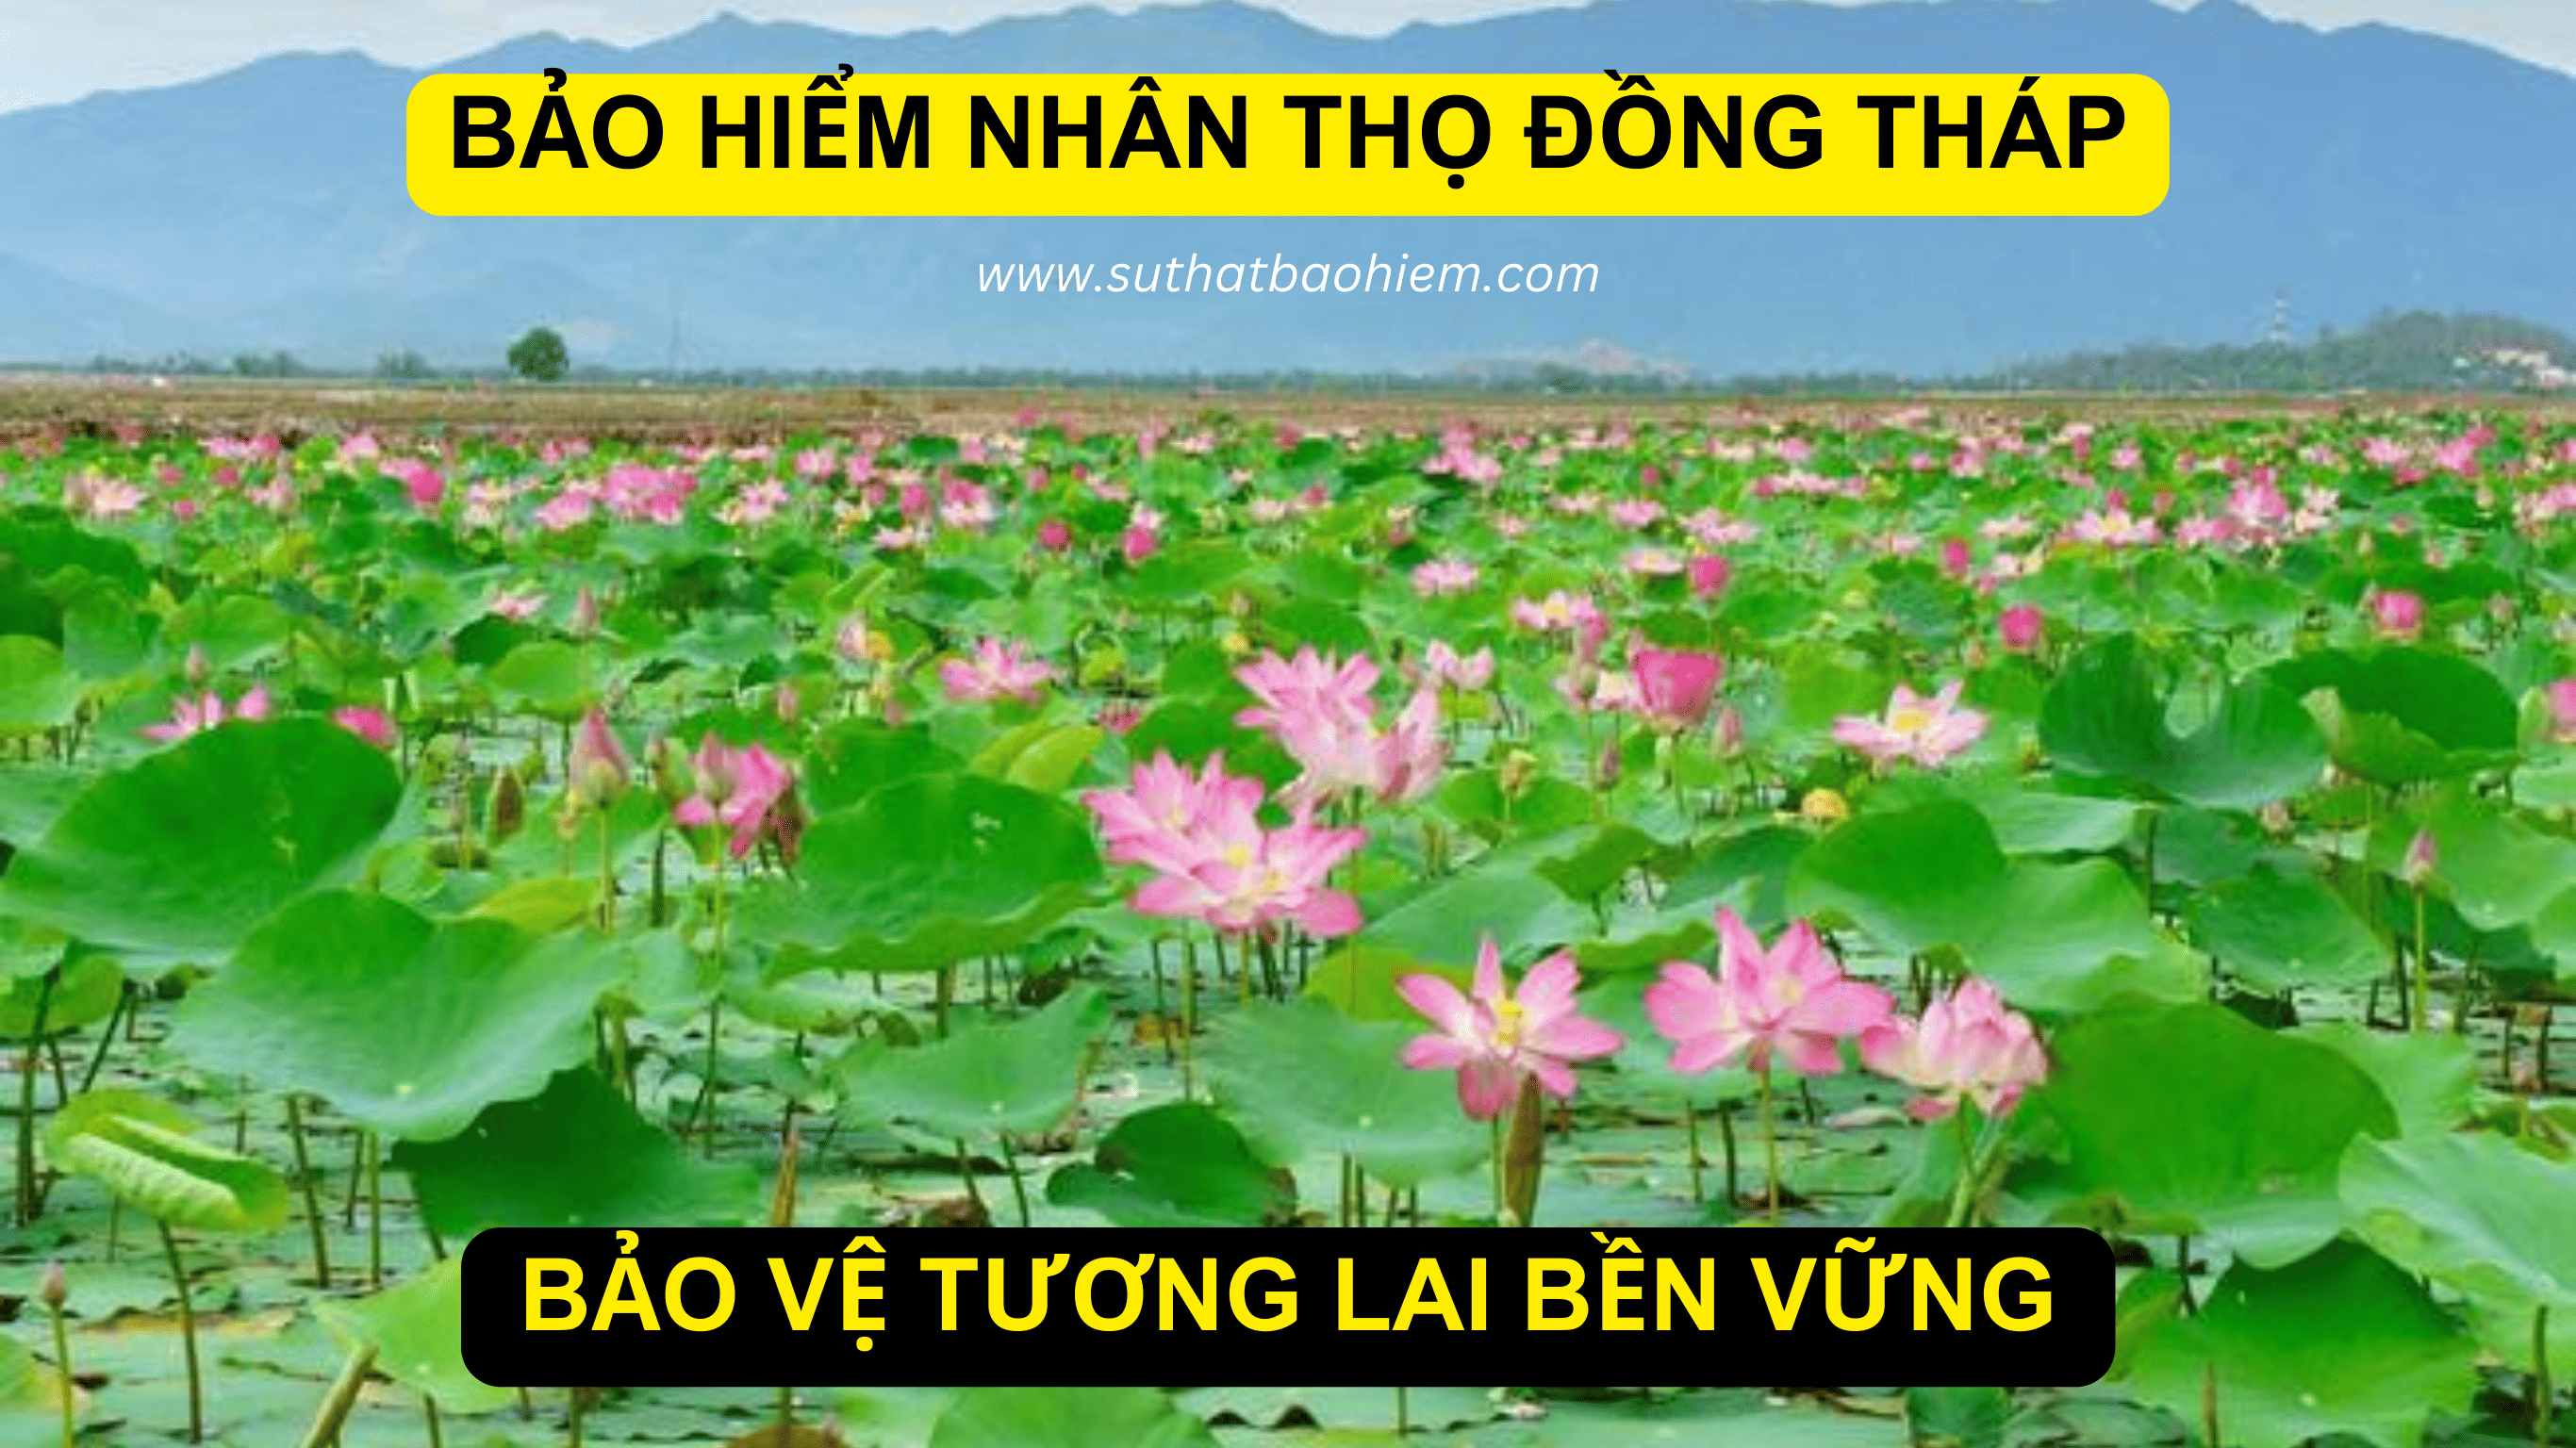 BAO HIEM NHAN THO HAI PHONG 19